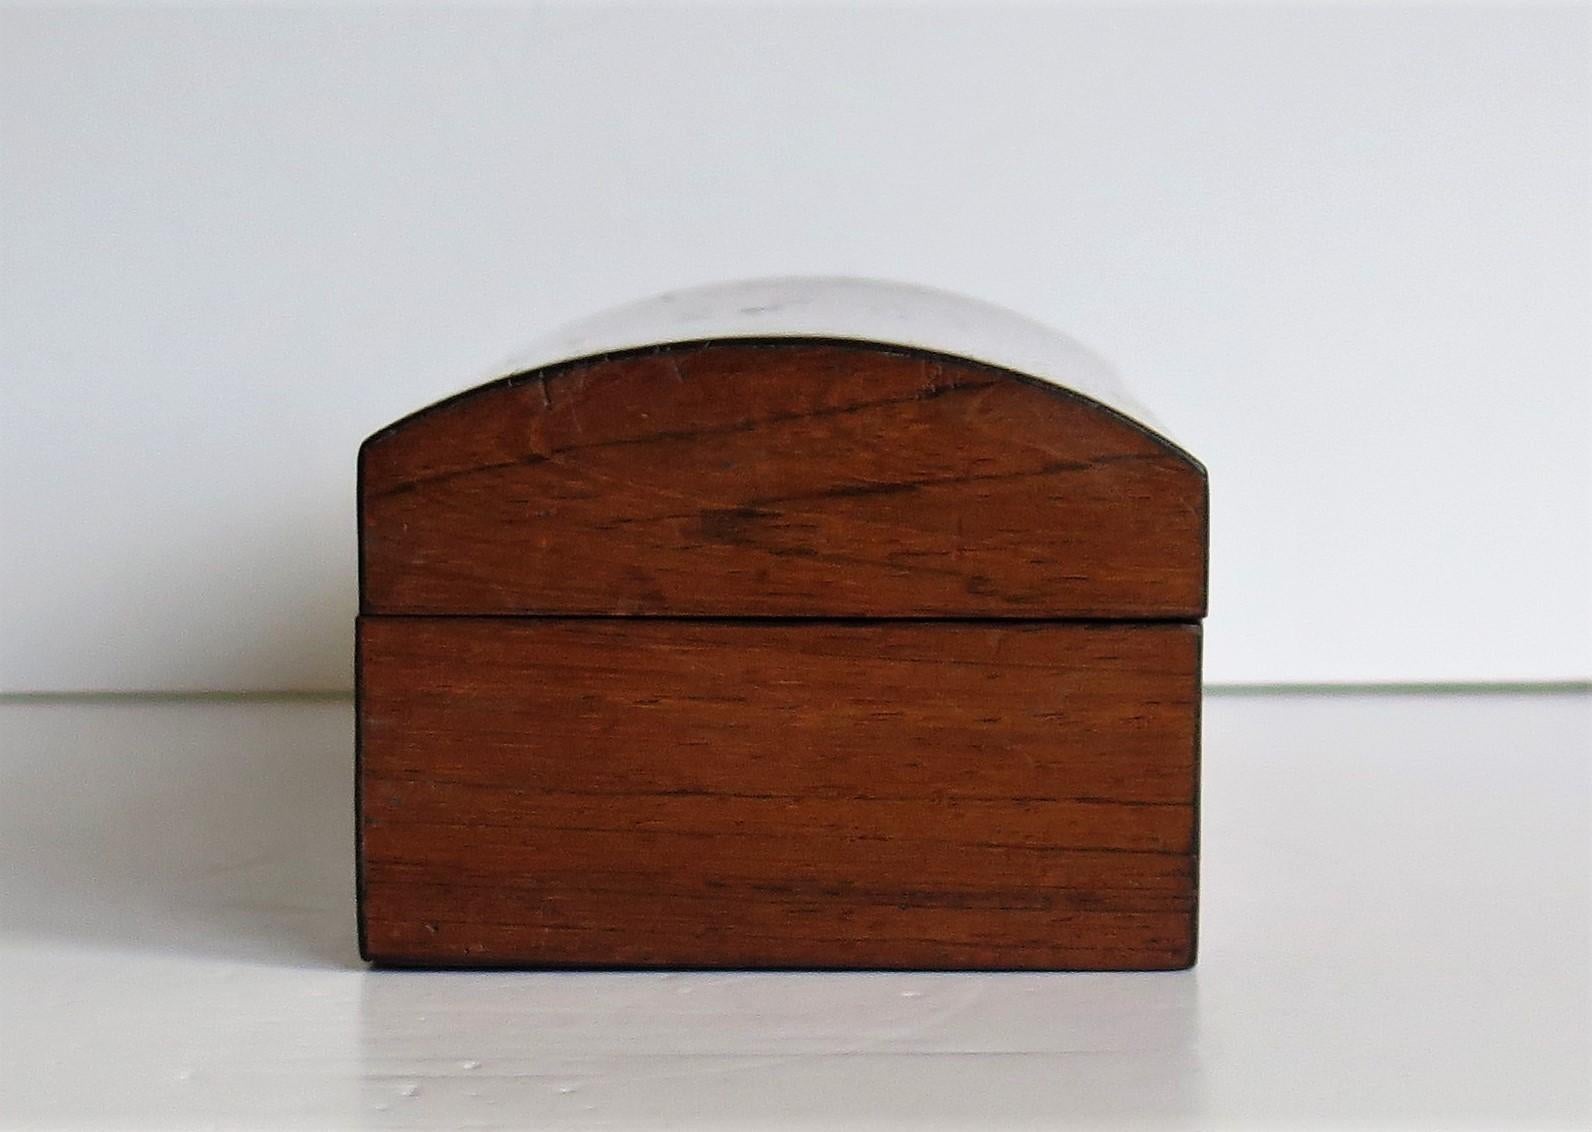 Hardwood Georgian Box with Domed Lid Cross Banded hardwood, circa 1810